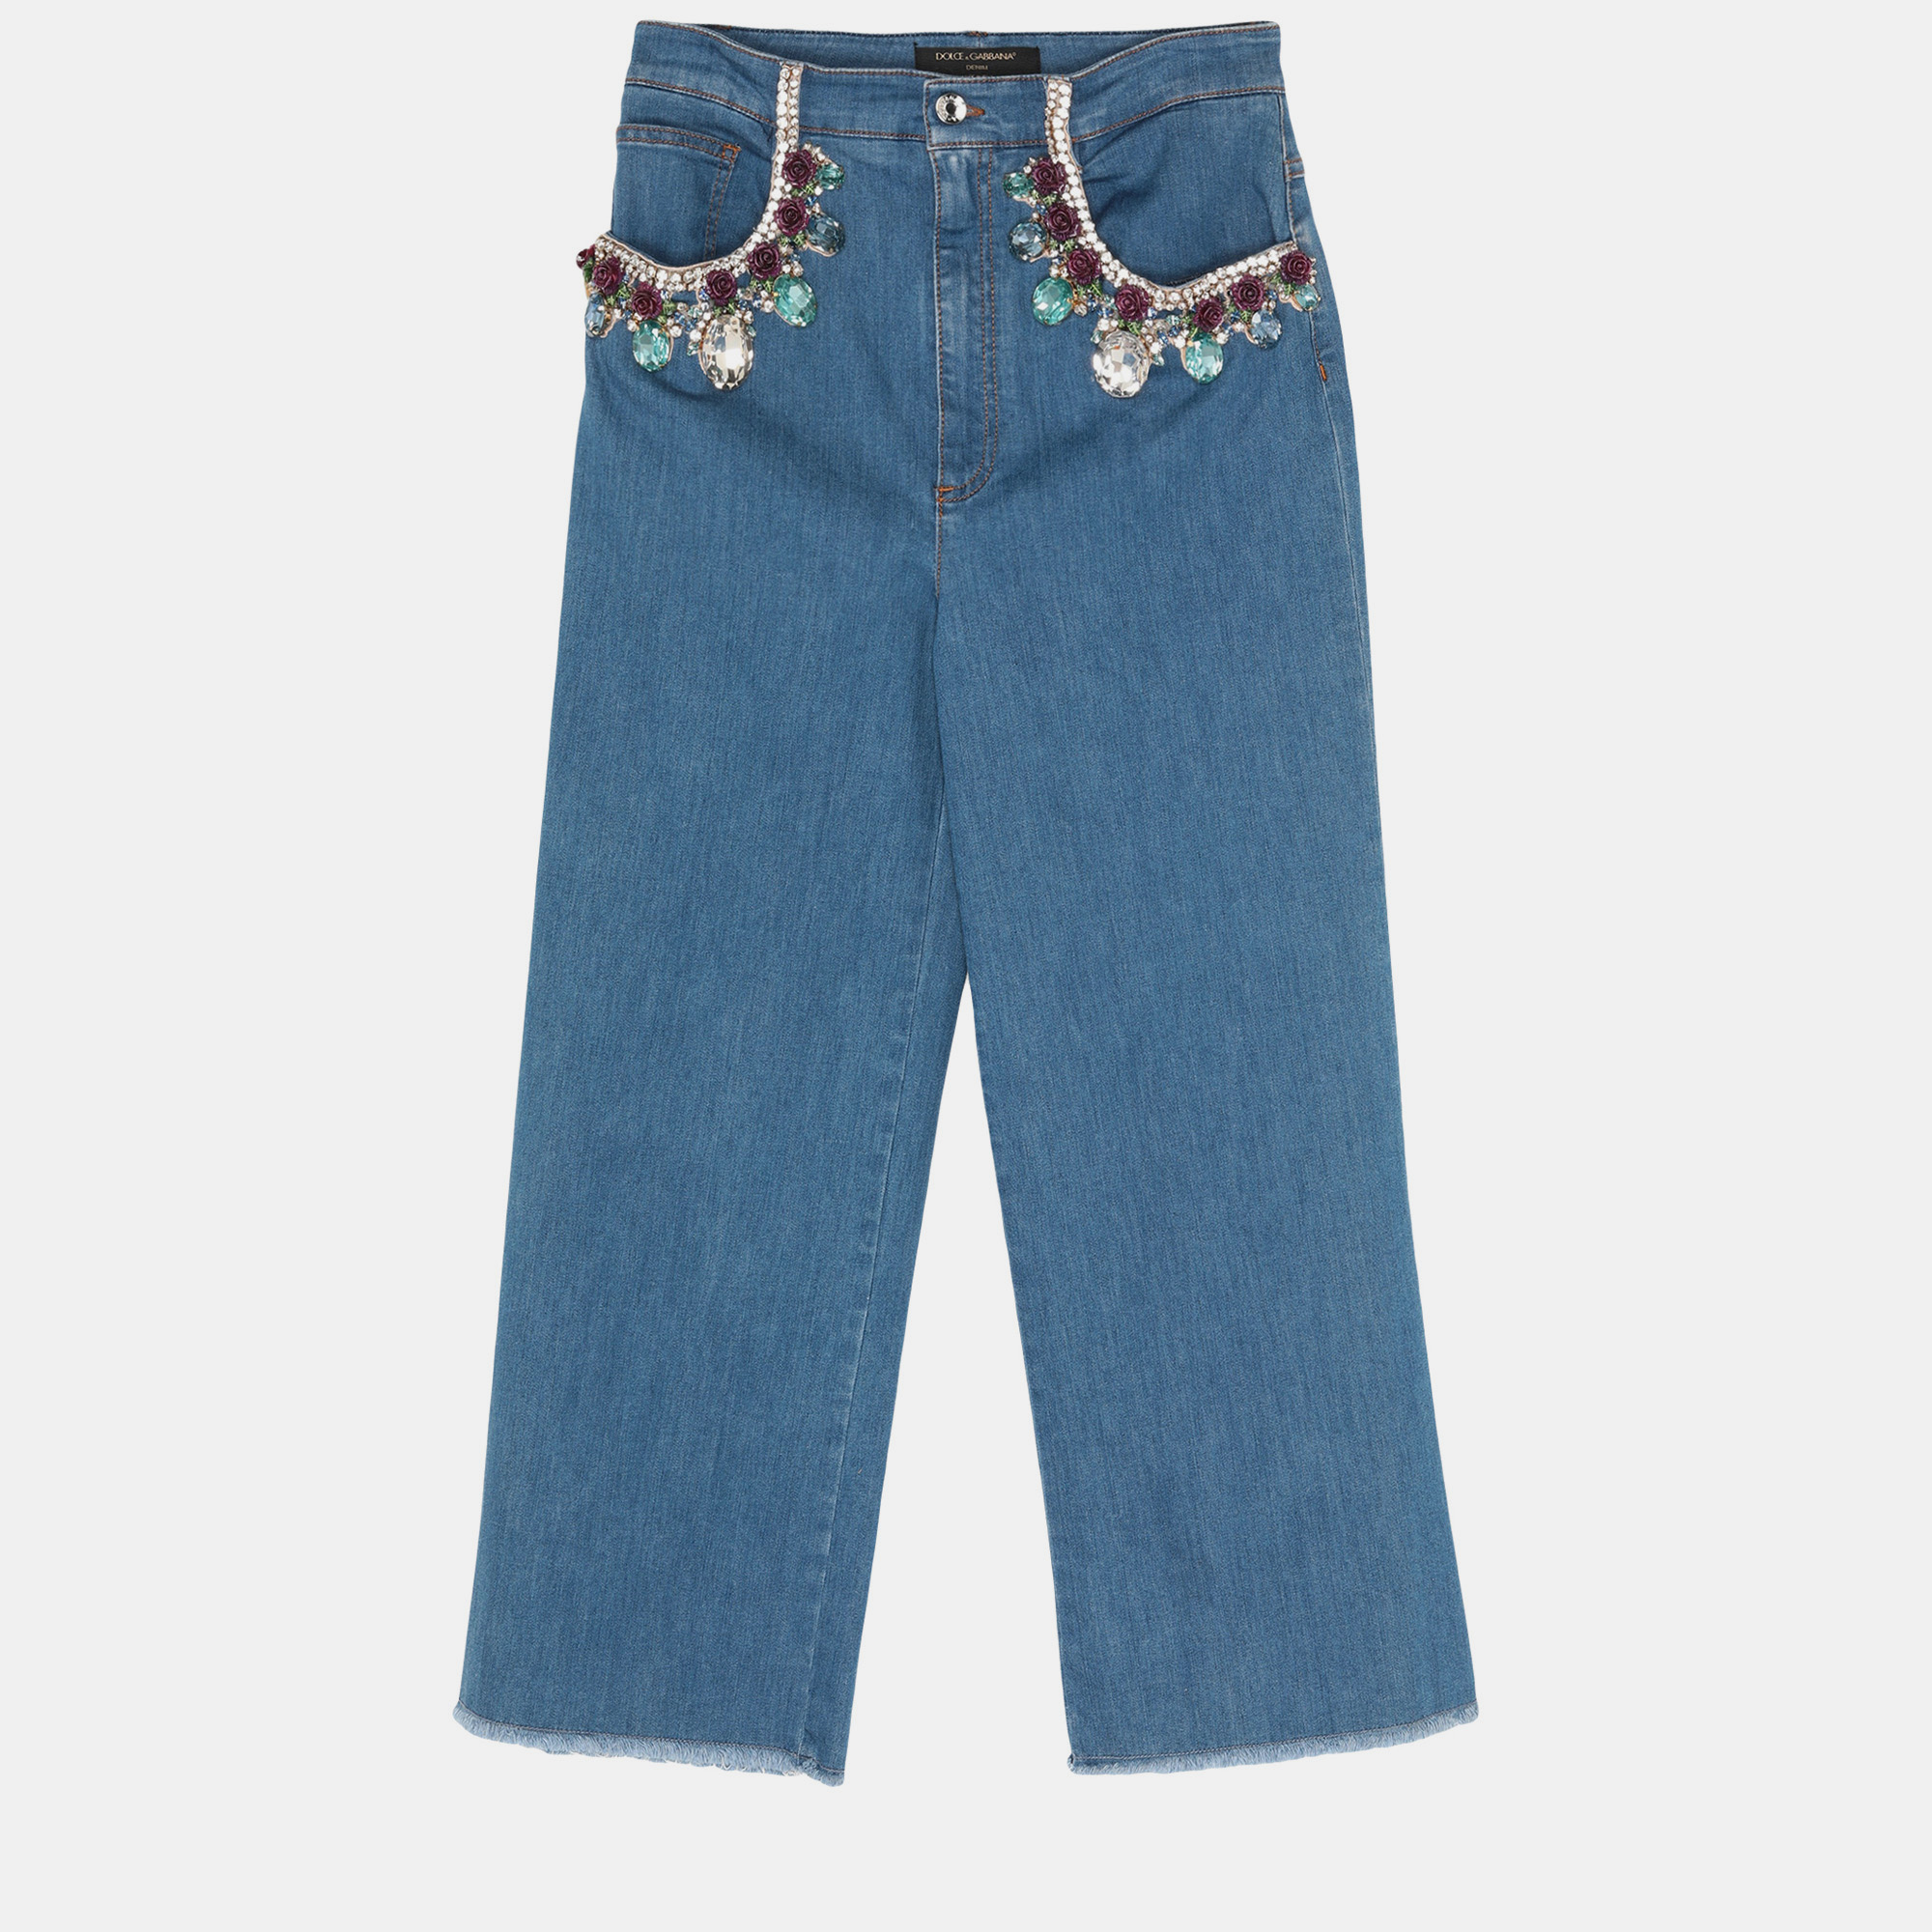 Dolce & gabbana cotton jeans 42